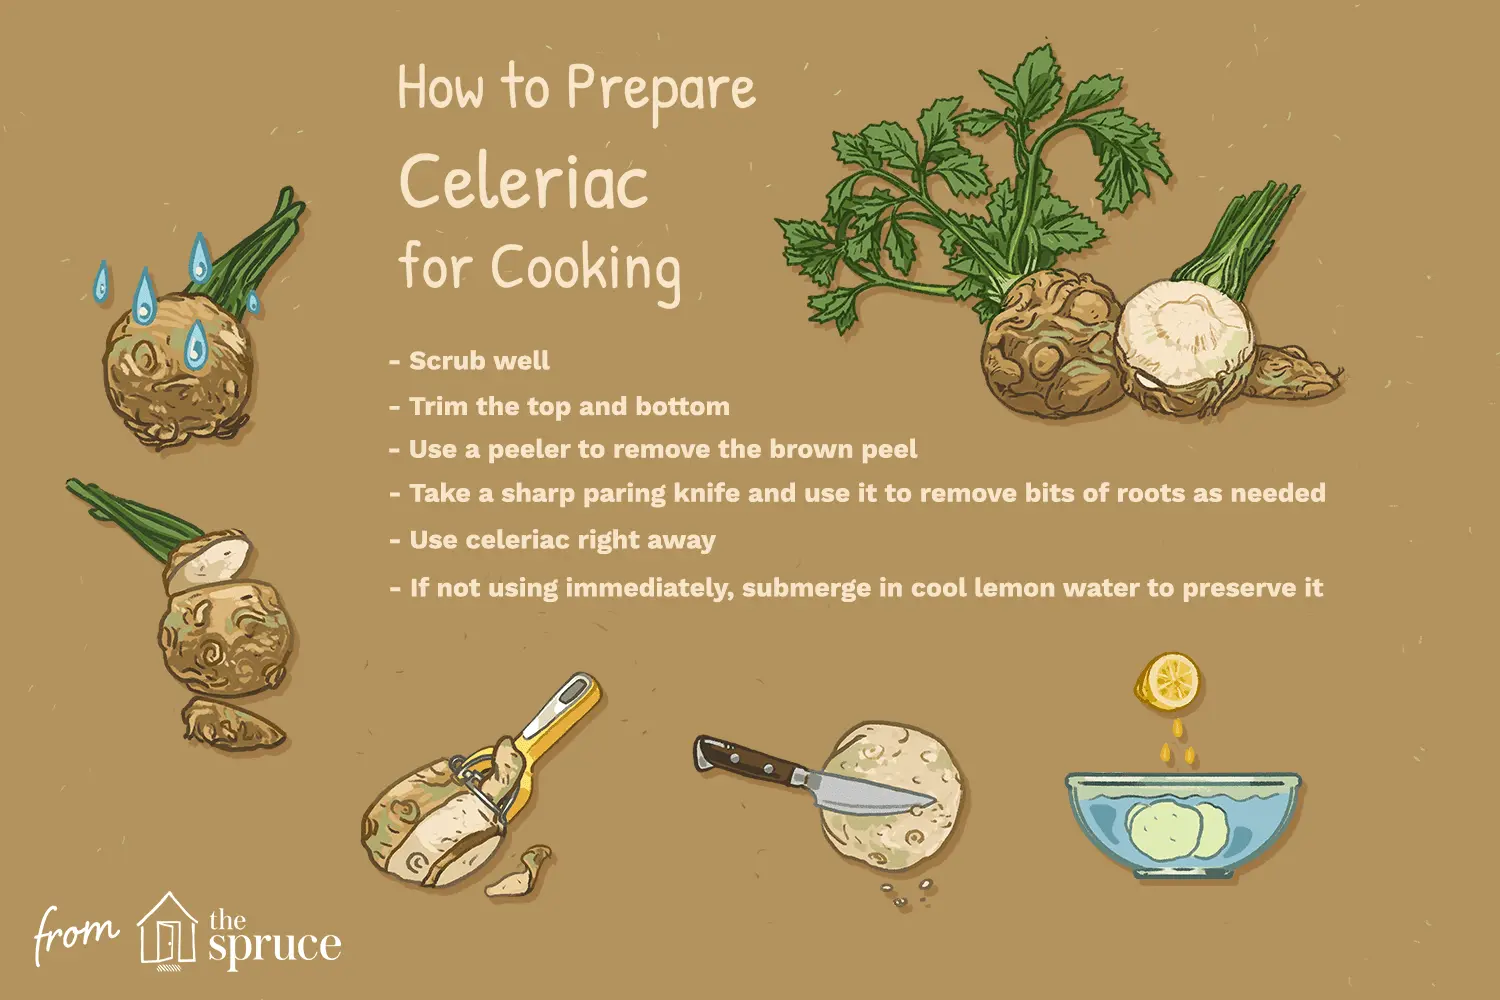 smoked celeriac steak - What is celeriac called in america